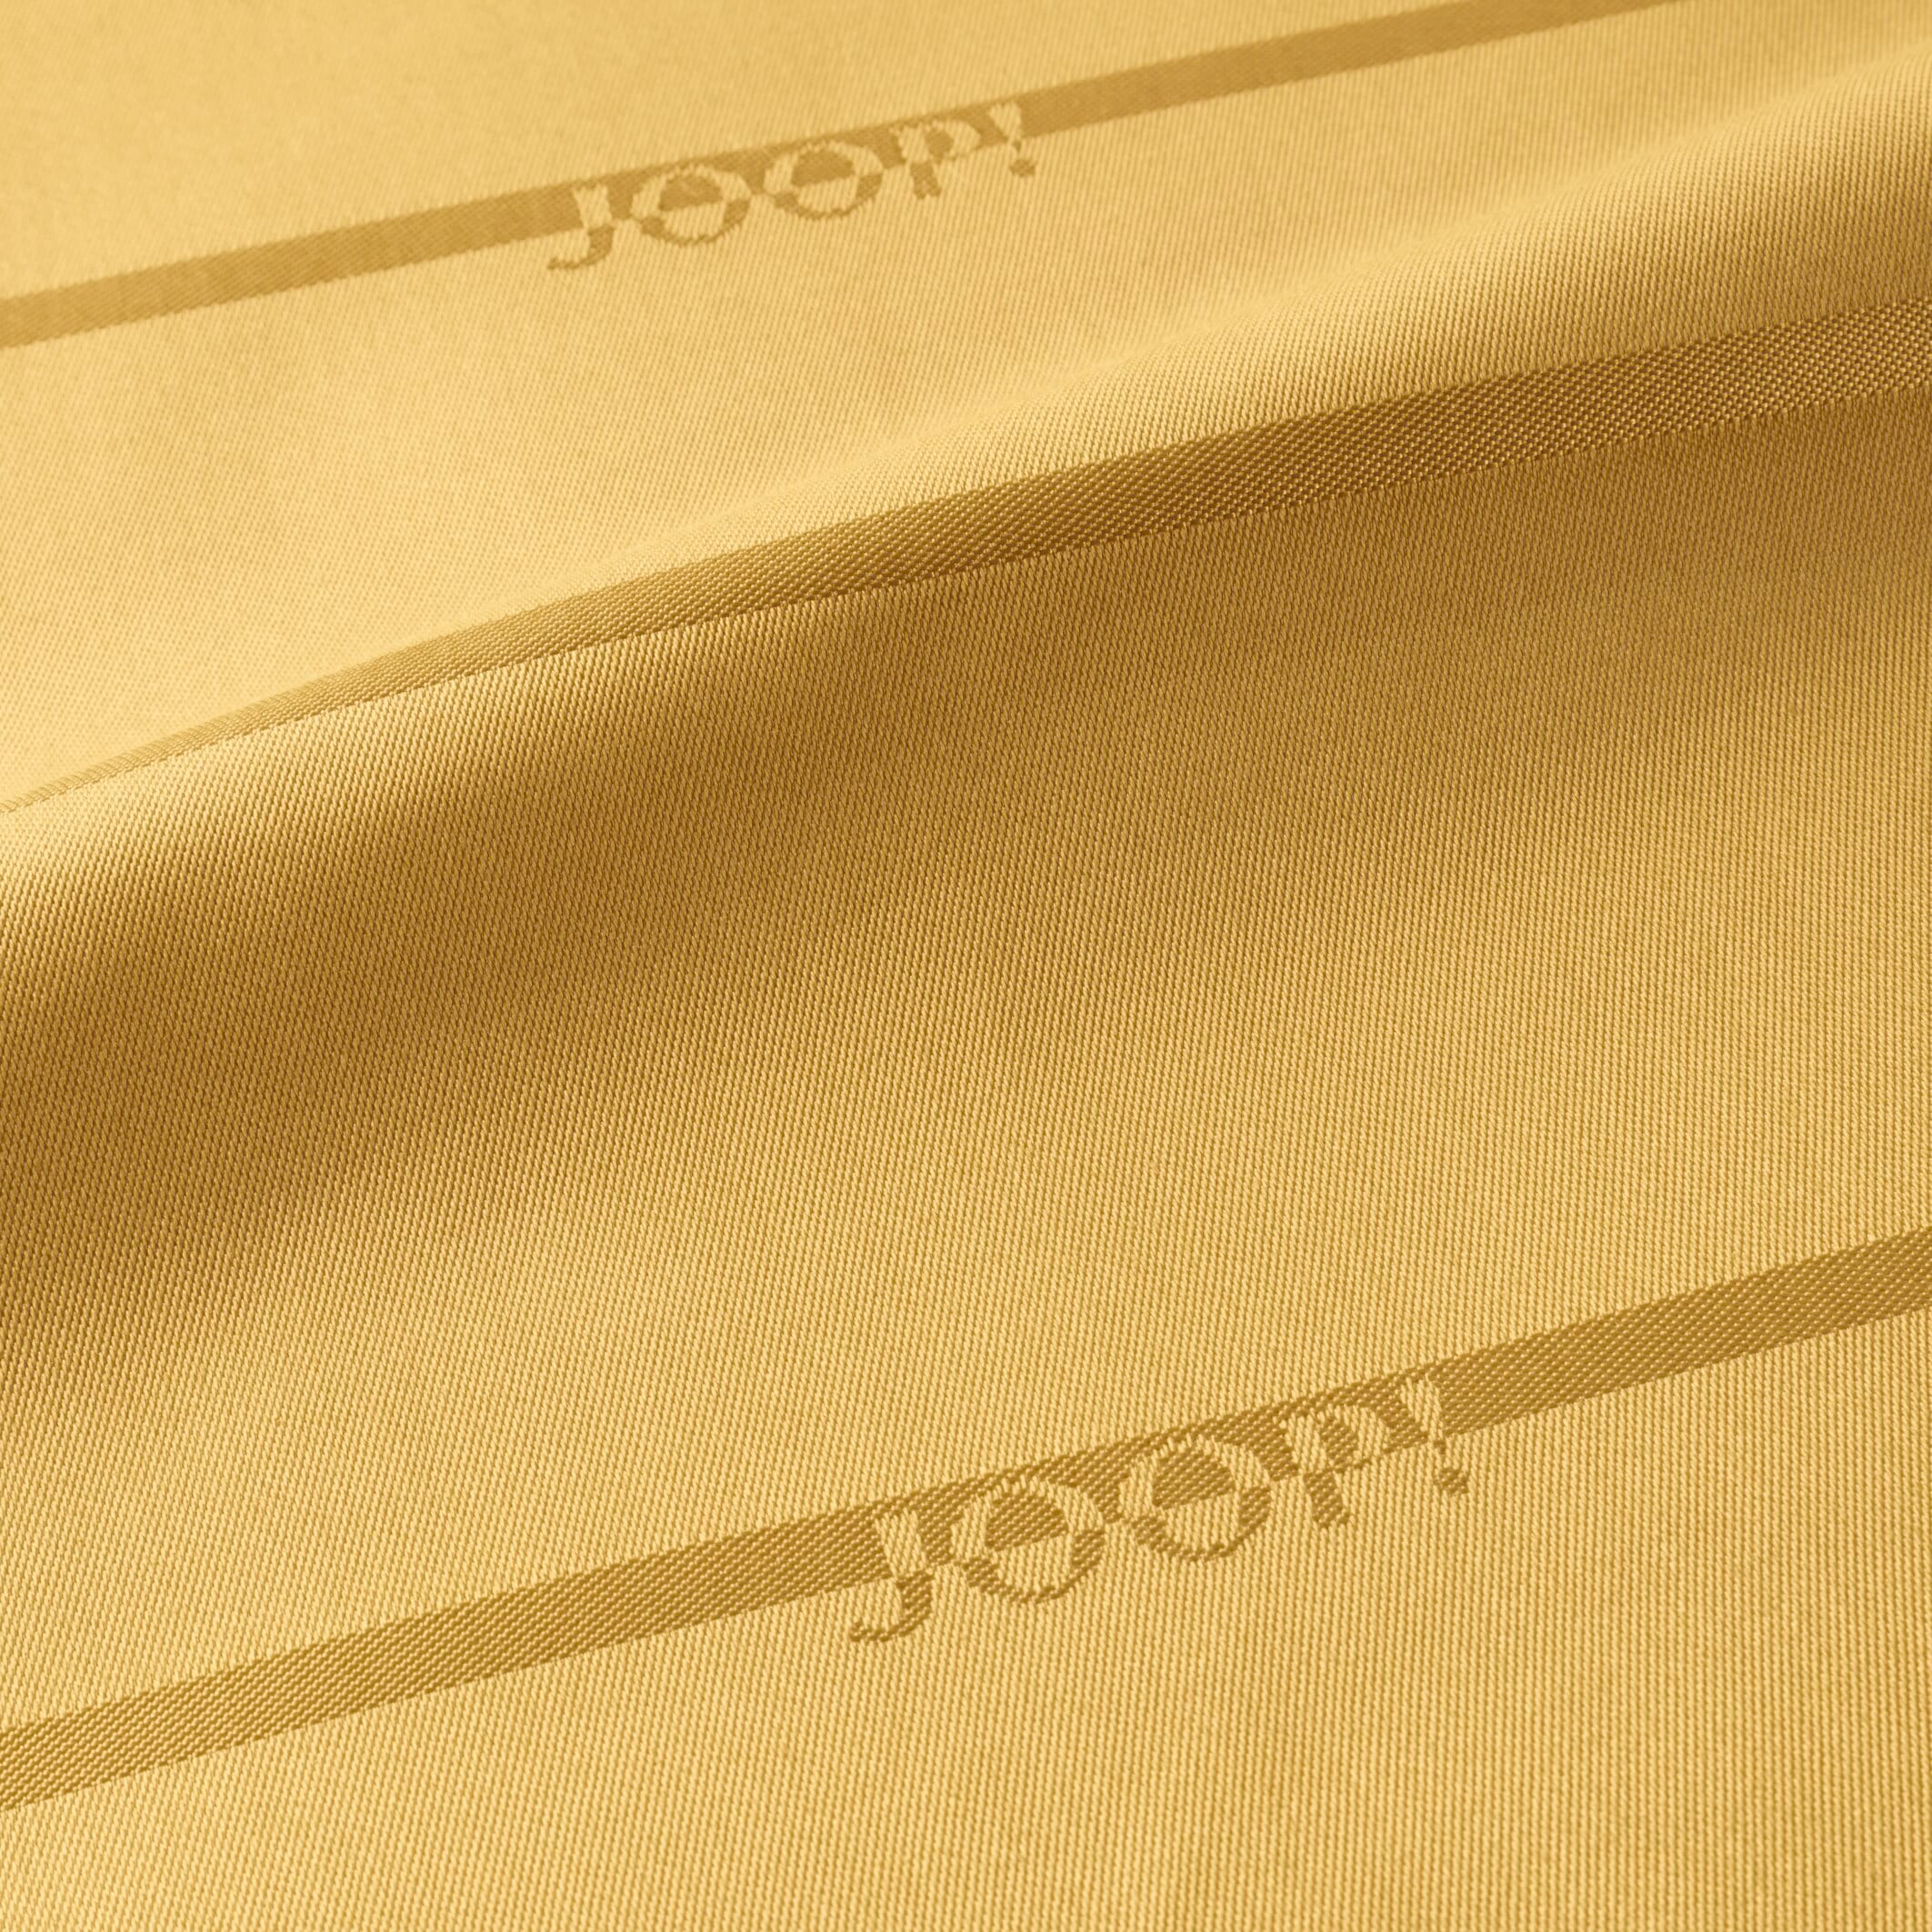 JOOP! Platzset »LOGO STRIPES«, (Set, 2 St.), mit elegantem JOOP! Logo-Muster im Streifen-Design, 36x48 cm